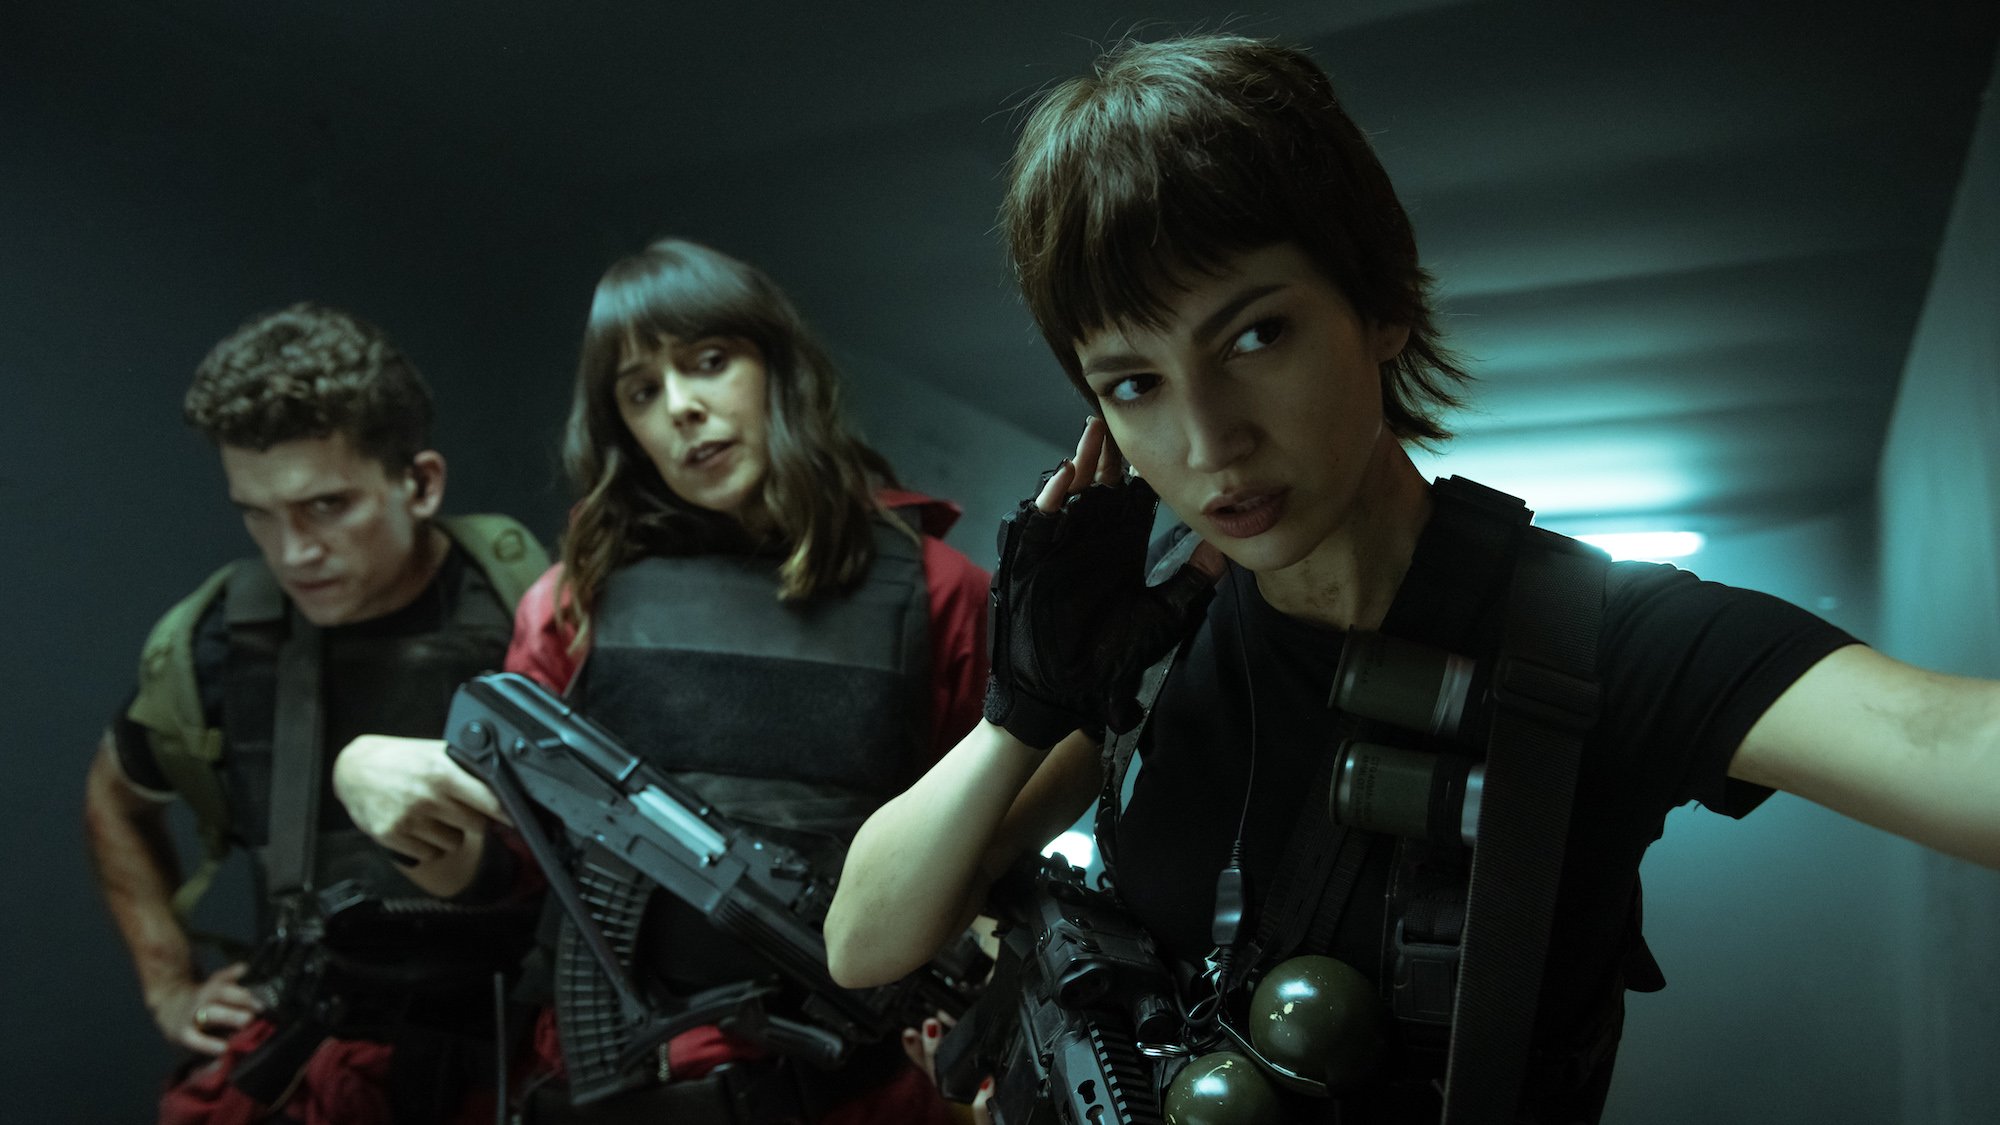 Jamie Lorente, Belén Cuesta, and Úrsula Corberó dressed in red and black gear in Netflix's 'Money Heist.'